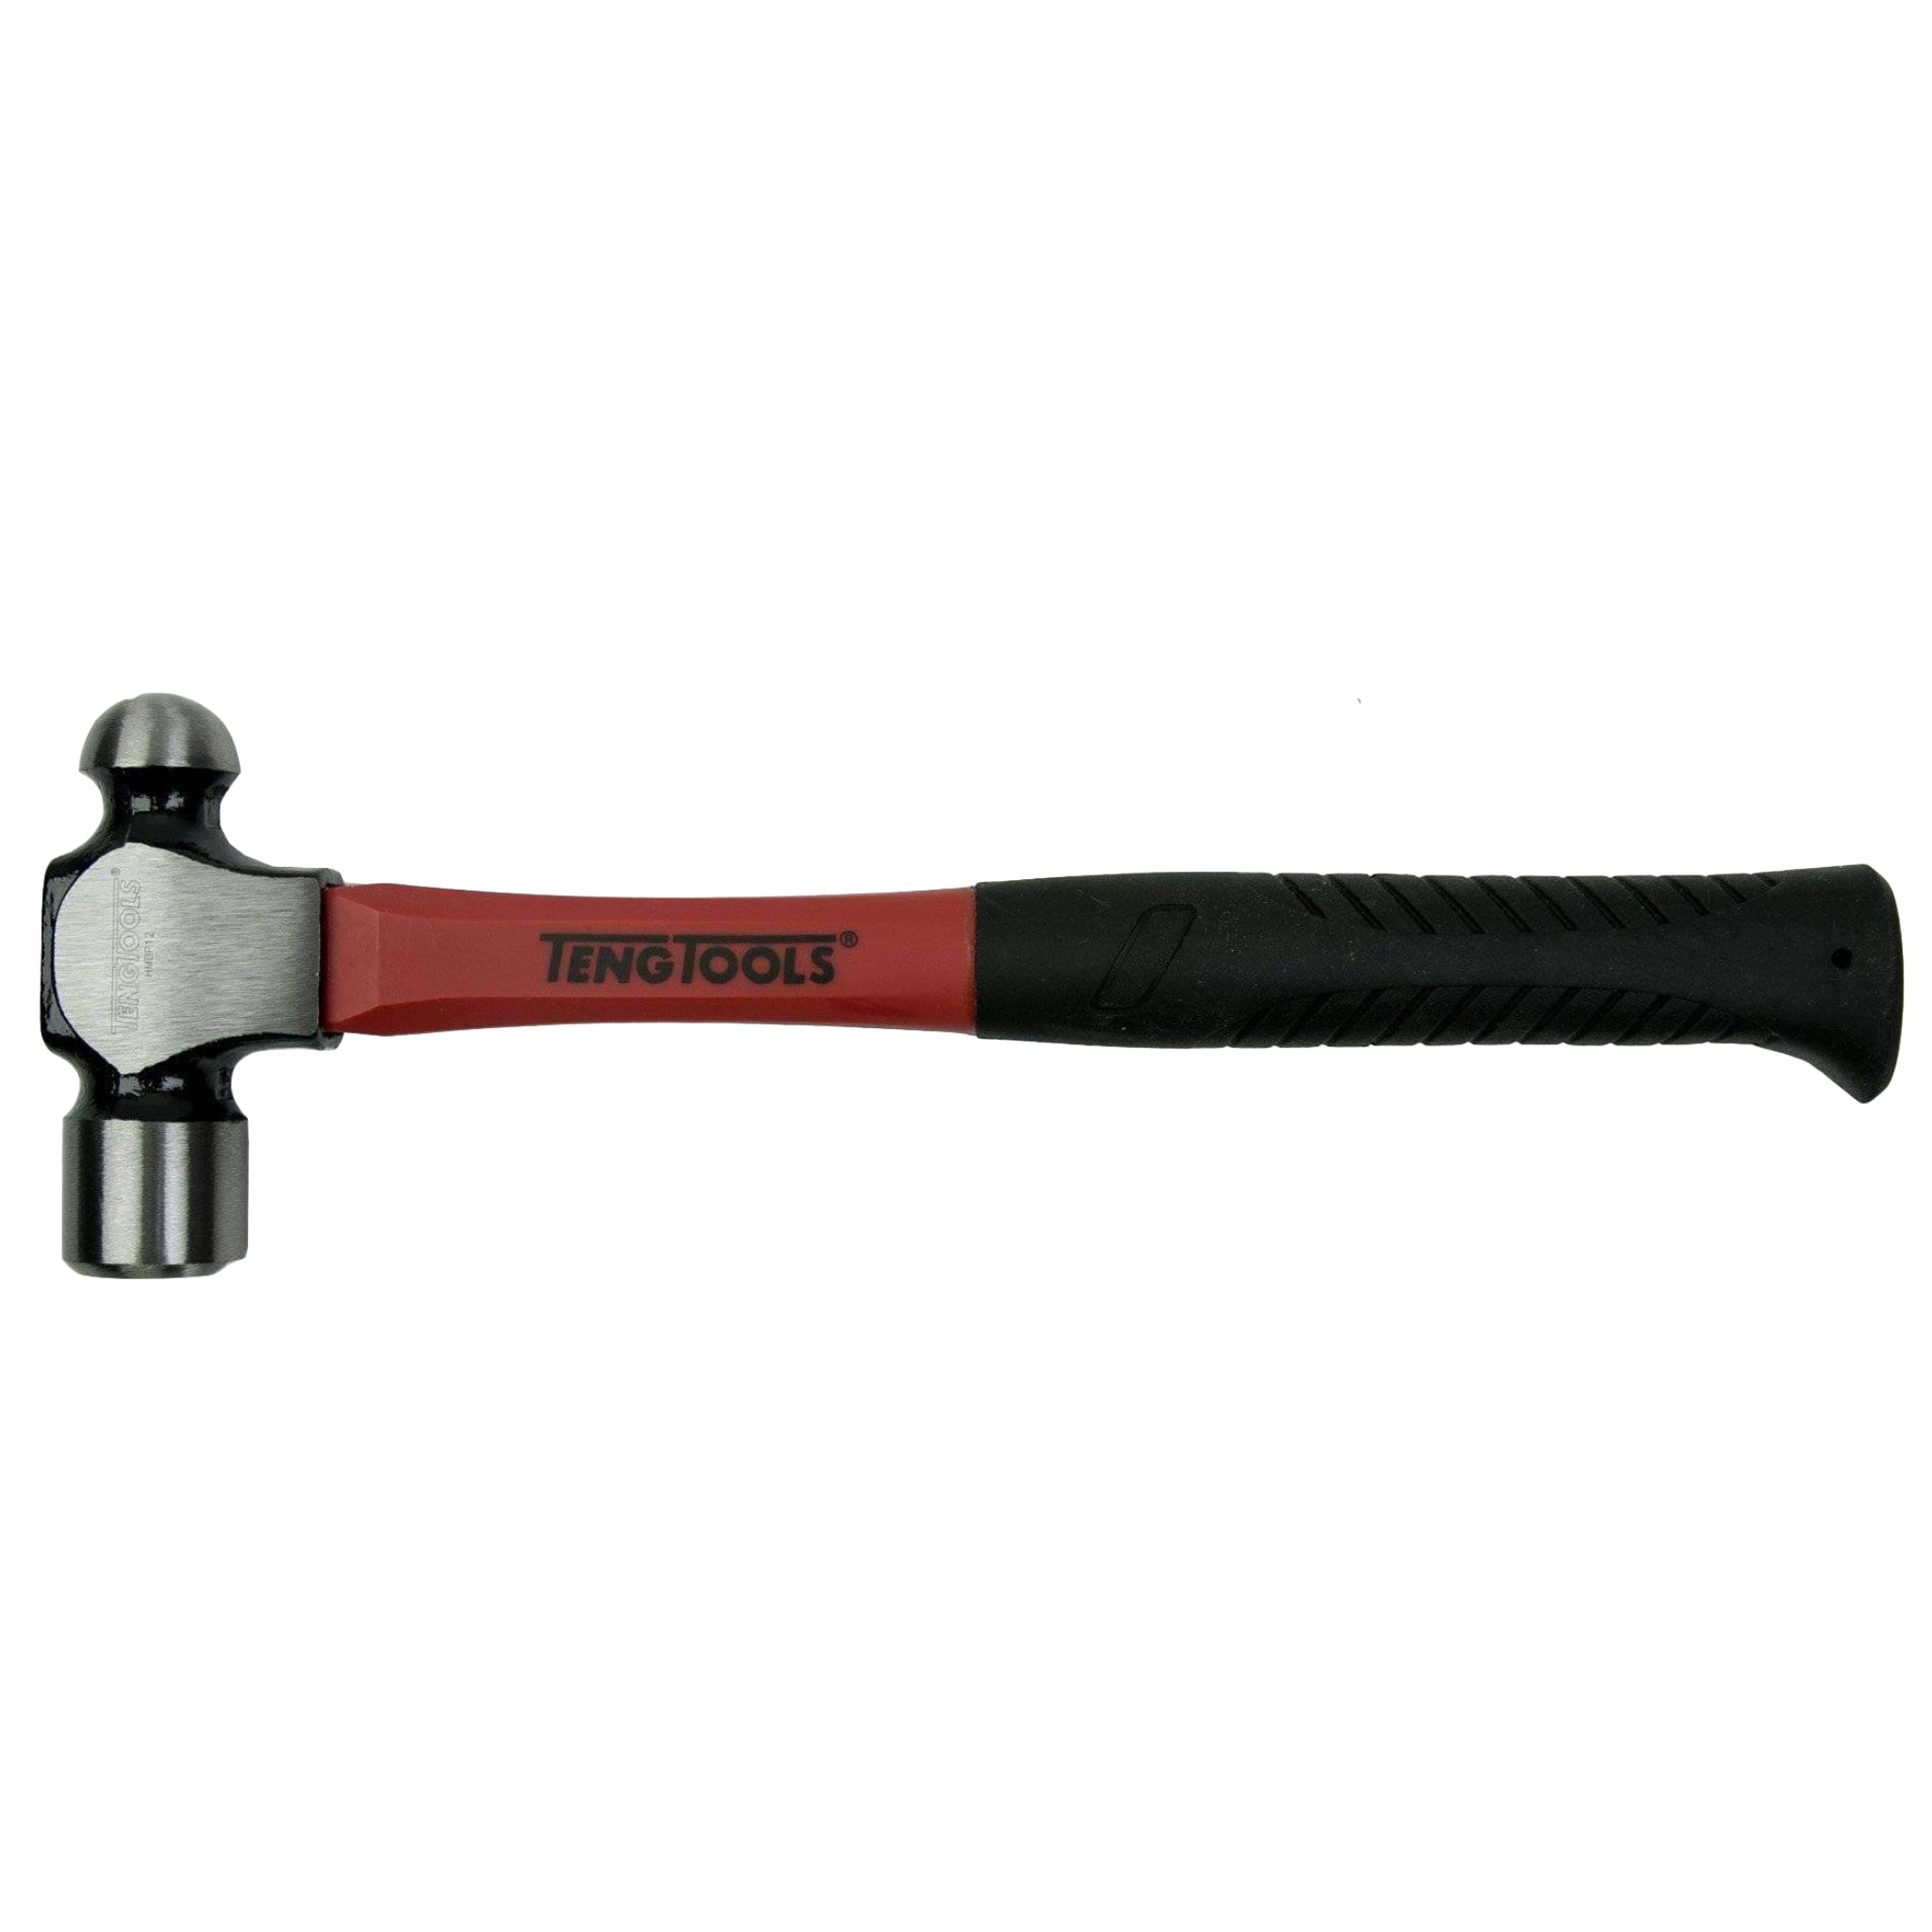 Teng Tools Ball Pein Hammer Range 12, 16, 24 And 32 Ounce (Oz) Hammers - 32 Oz